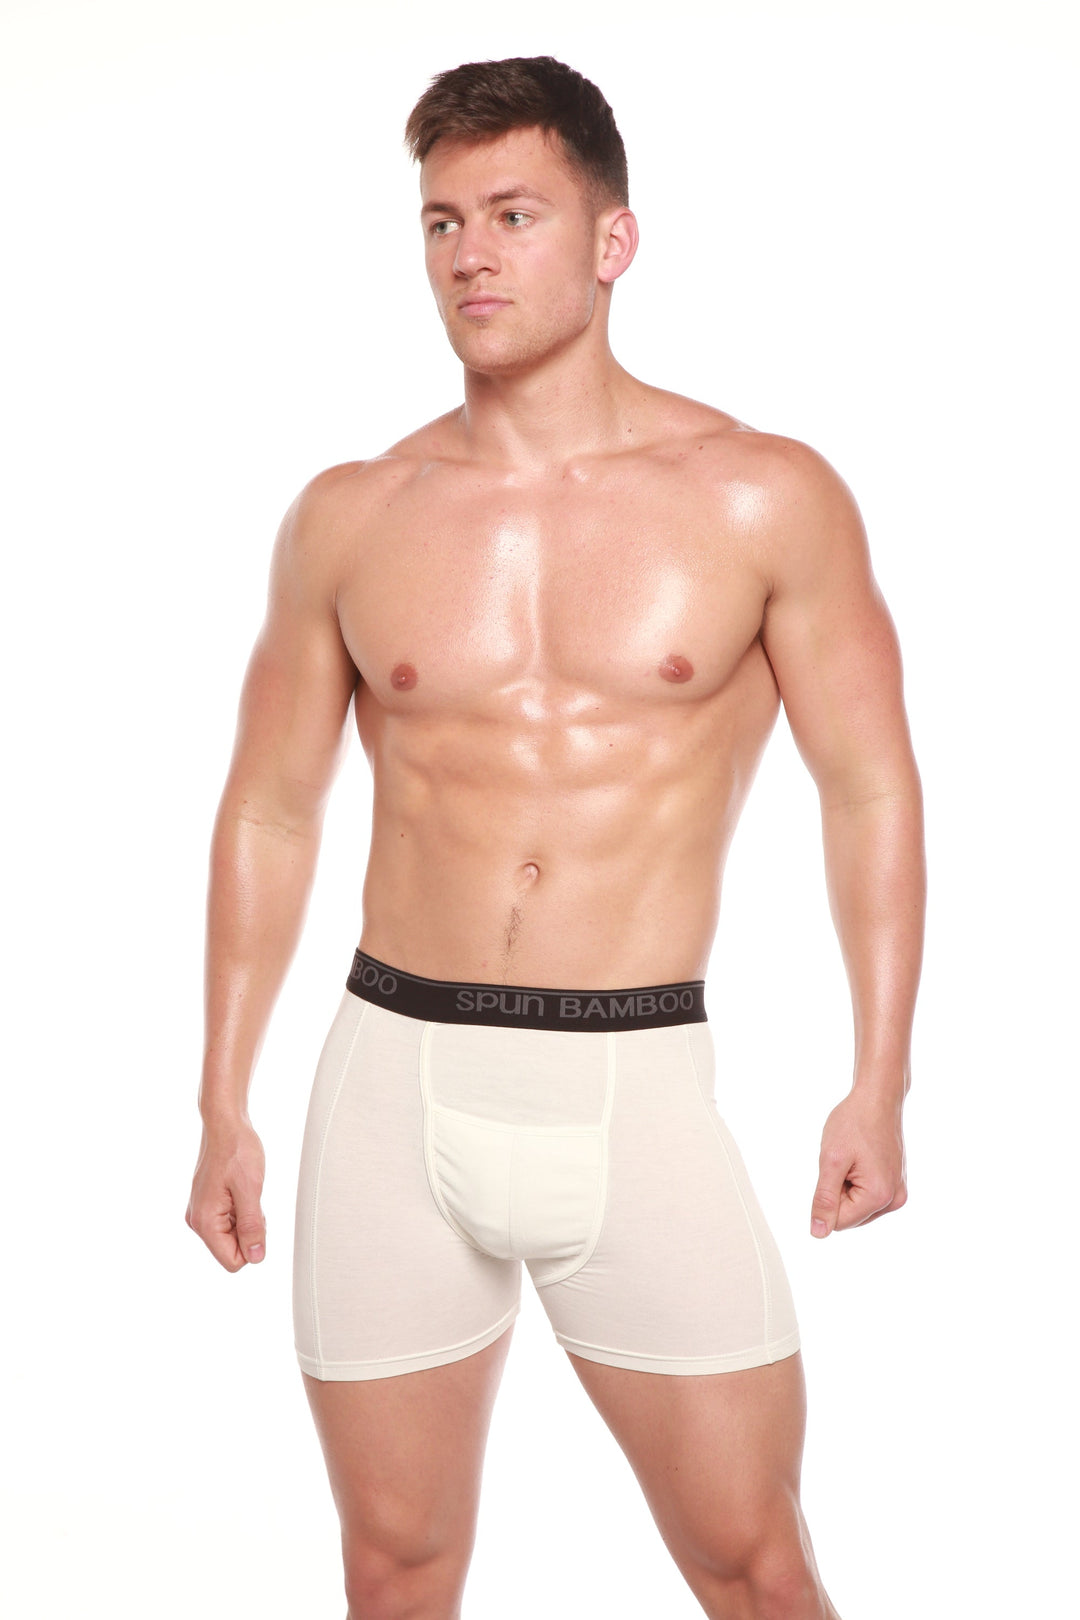 Bamboo Boxer Athletic Underwear by Spun Bamboo - Medium to X-Large Sizes